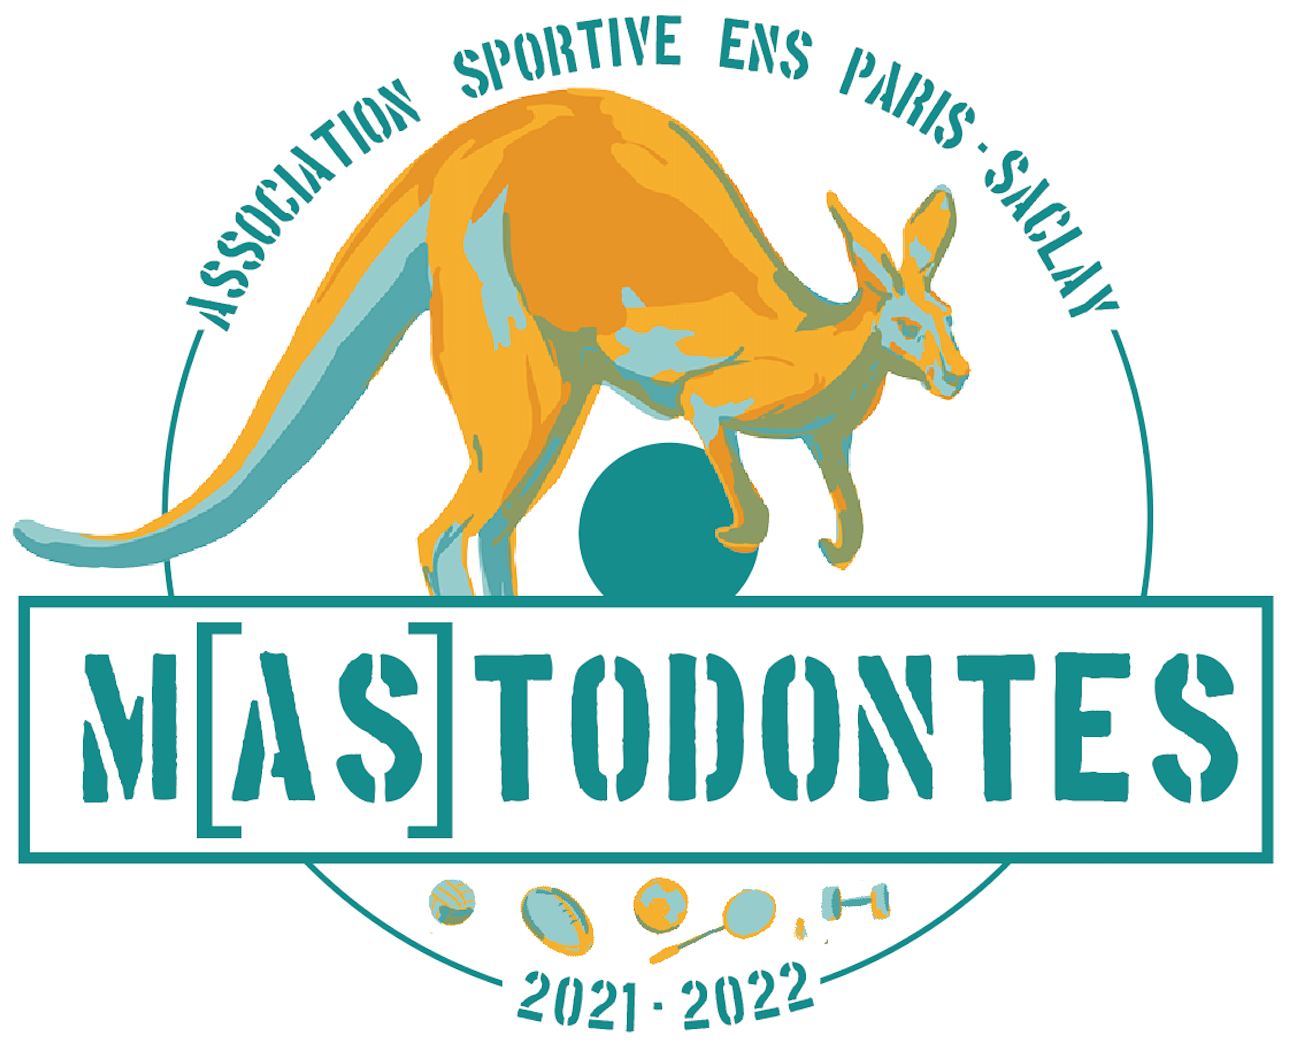 mastodontes.png